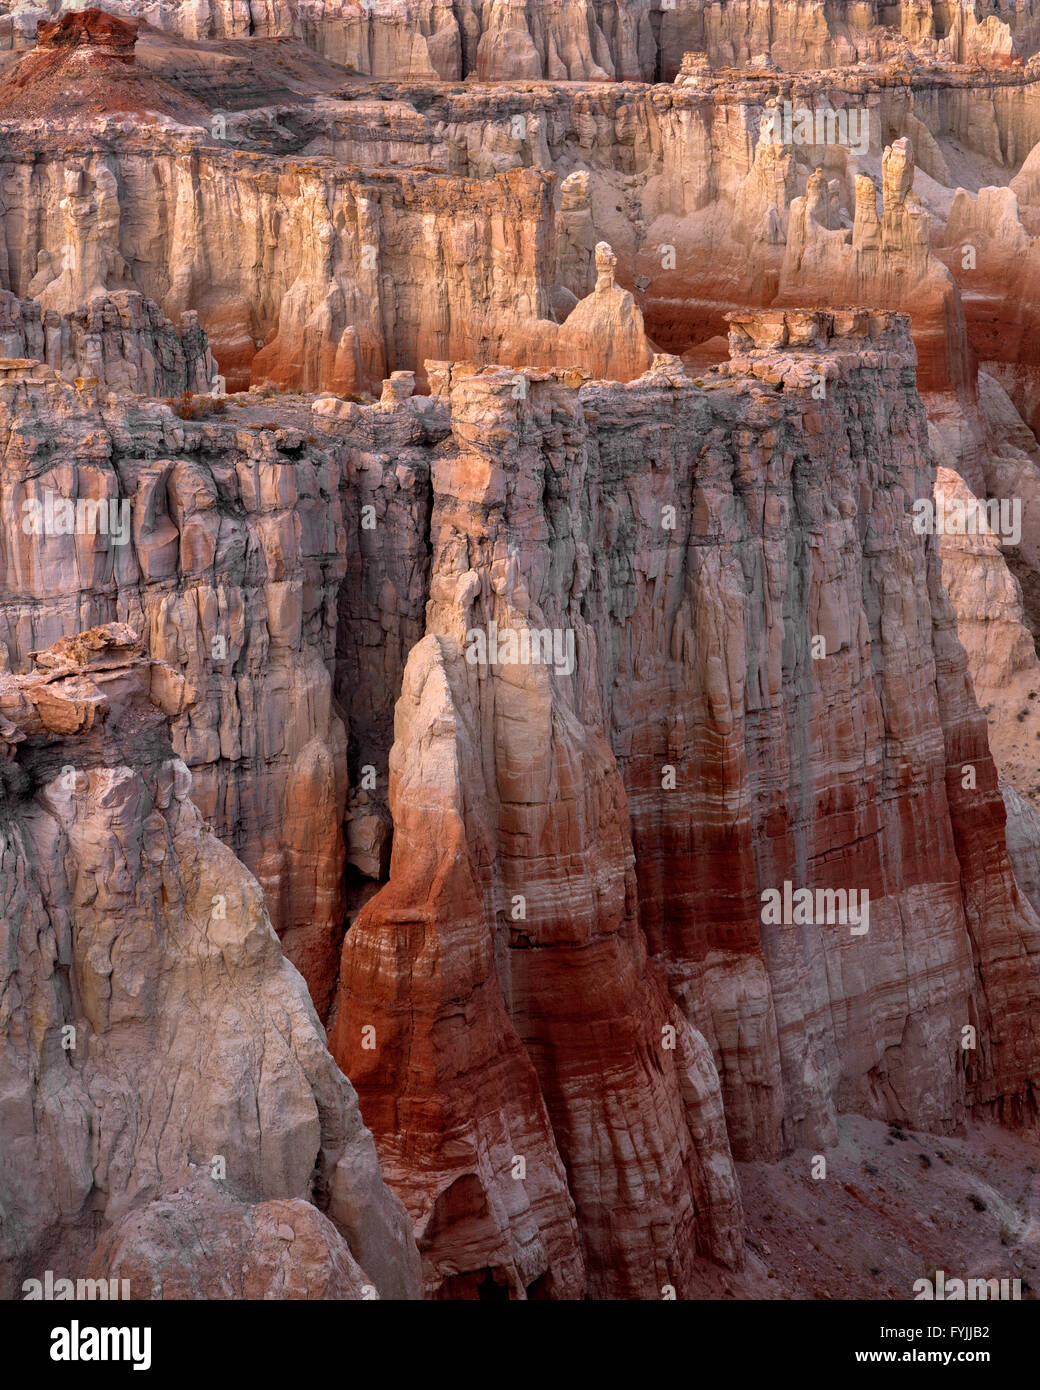 USA, Arizona, Coconino County, Moenkopi Plateau. Colorful, eroded sedimentary formations. Stock Photo